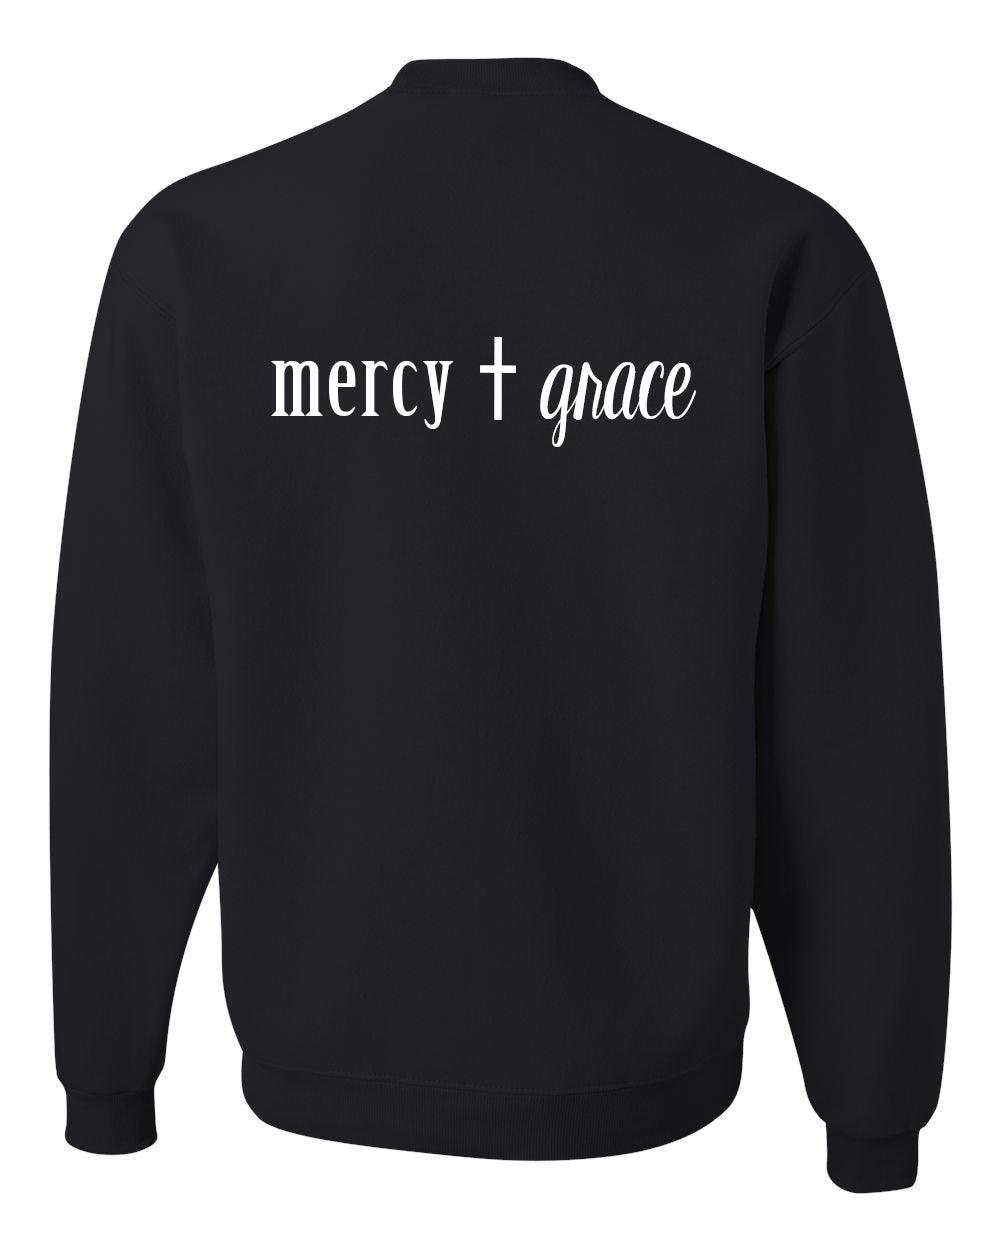 Simply Said Pray then Let Go! Black Fleece Sweatshirt - Mercy Plus Grace